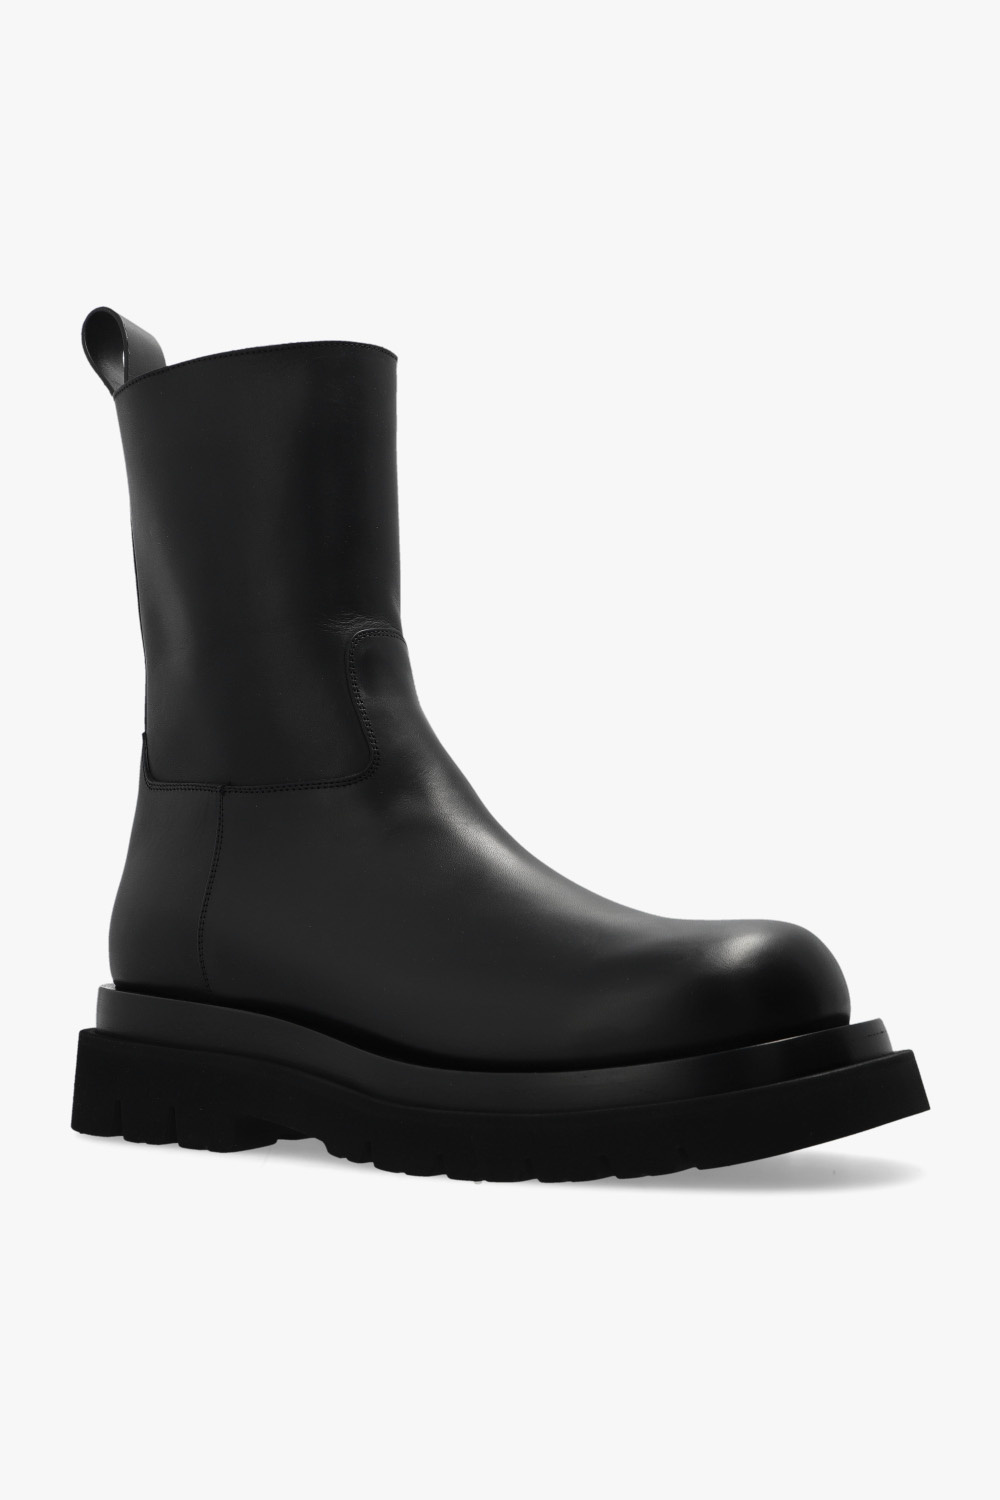 Bottega Veneta ‘Puddle’ leather ankle boots